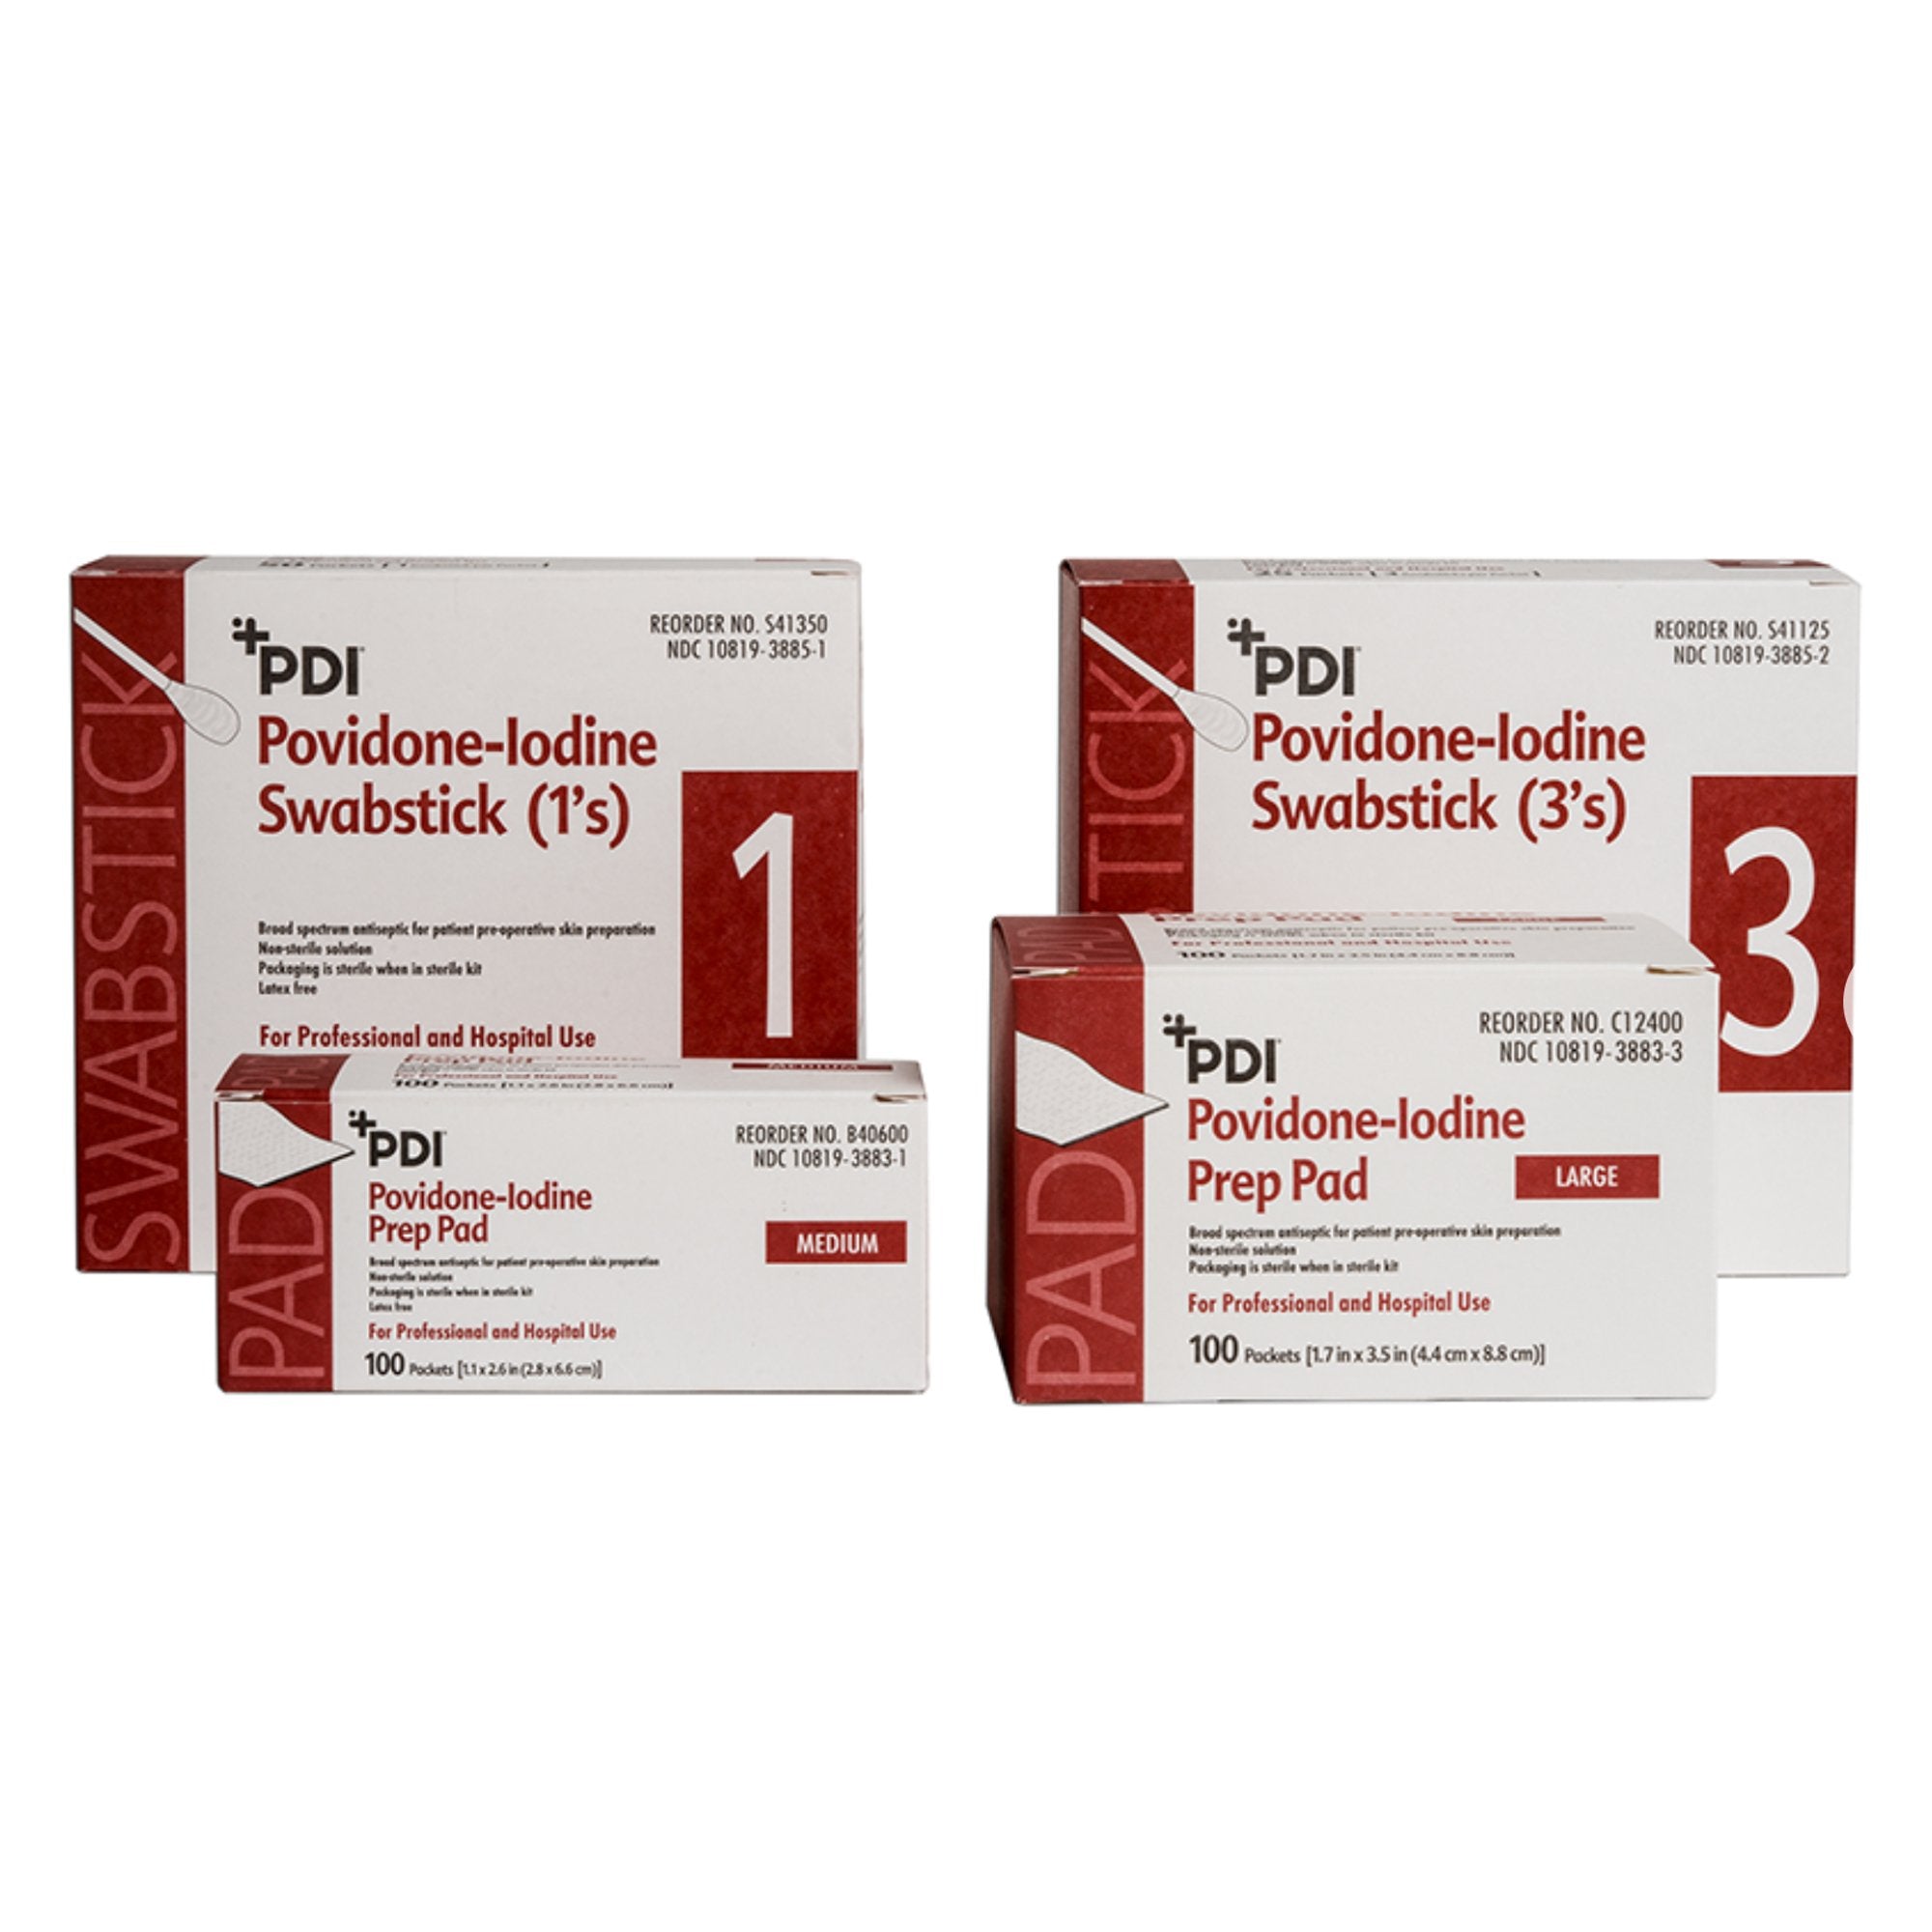 PVP Prep Pad PDI 10% Strength Povidone-Iodine Individual Packet Medium NonSterile